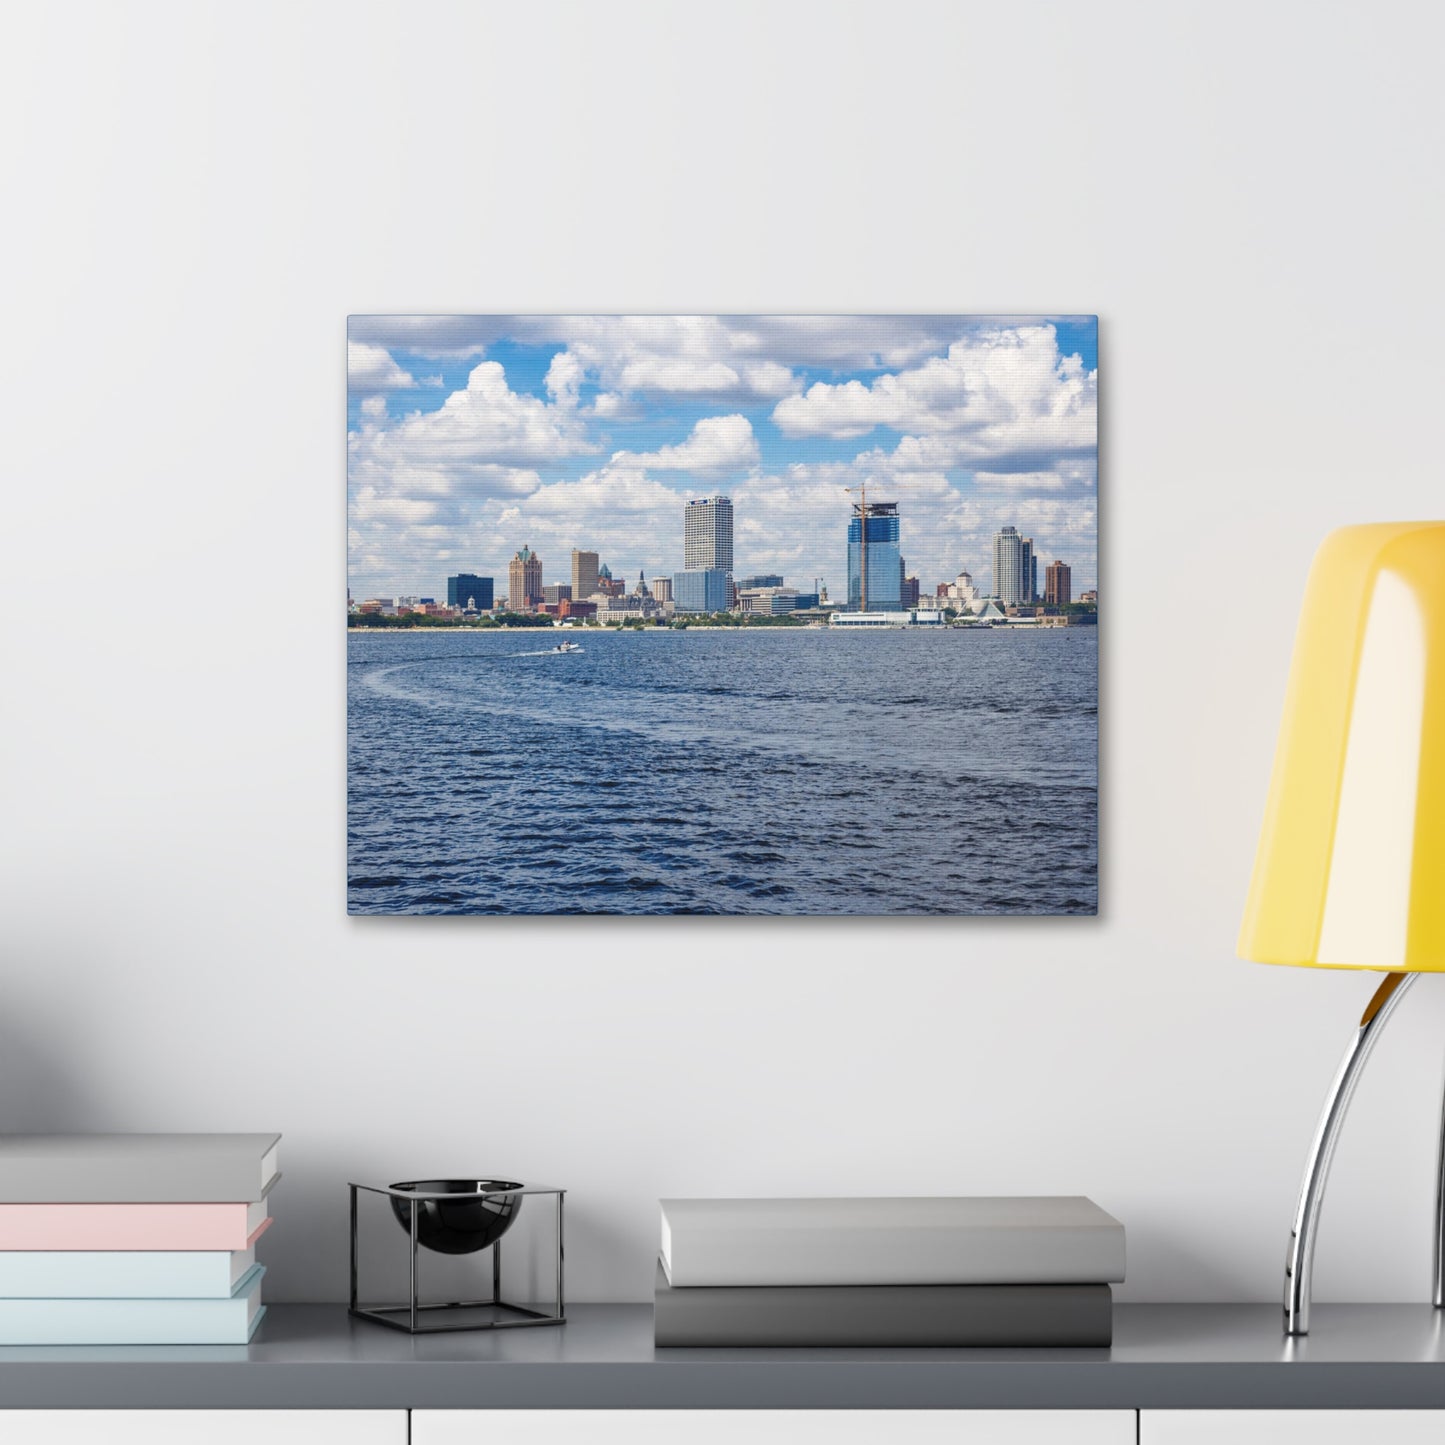 Milwaukee Wisconsin Skyline from Lake Michigan, Photography Canvas Wrap Wall Art